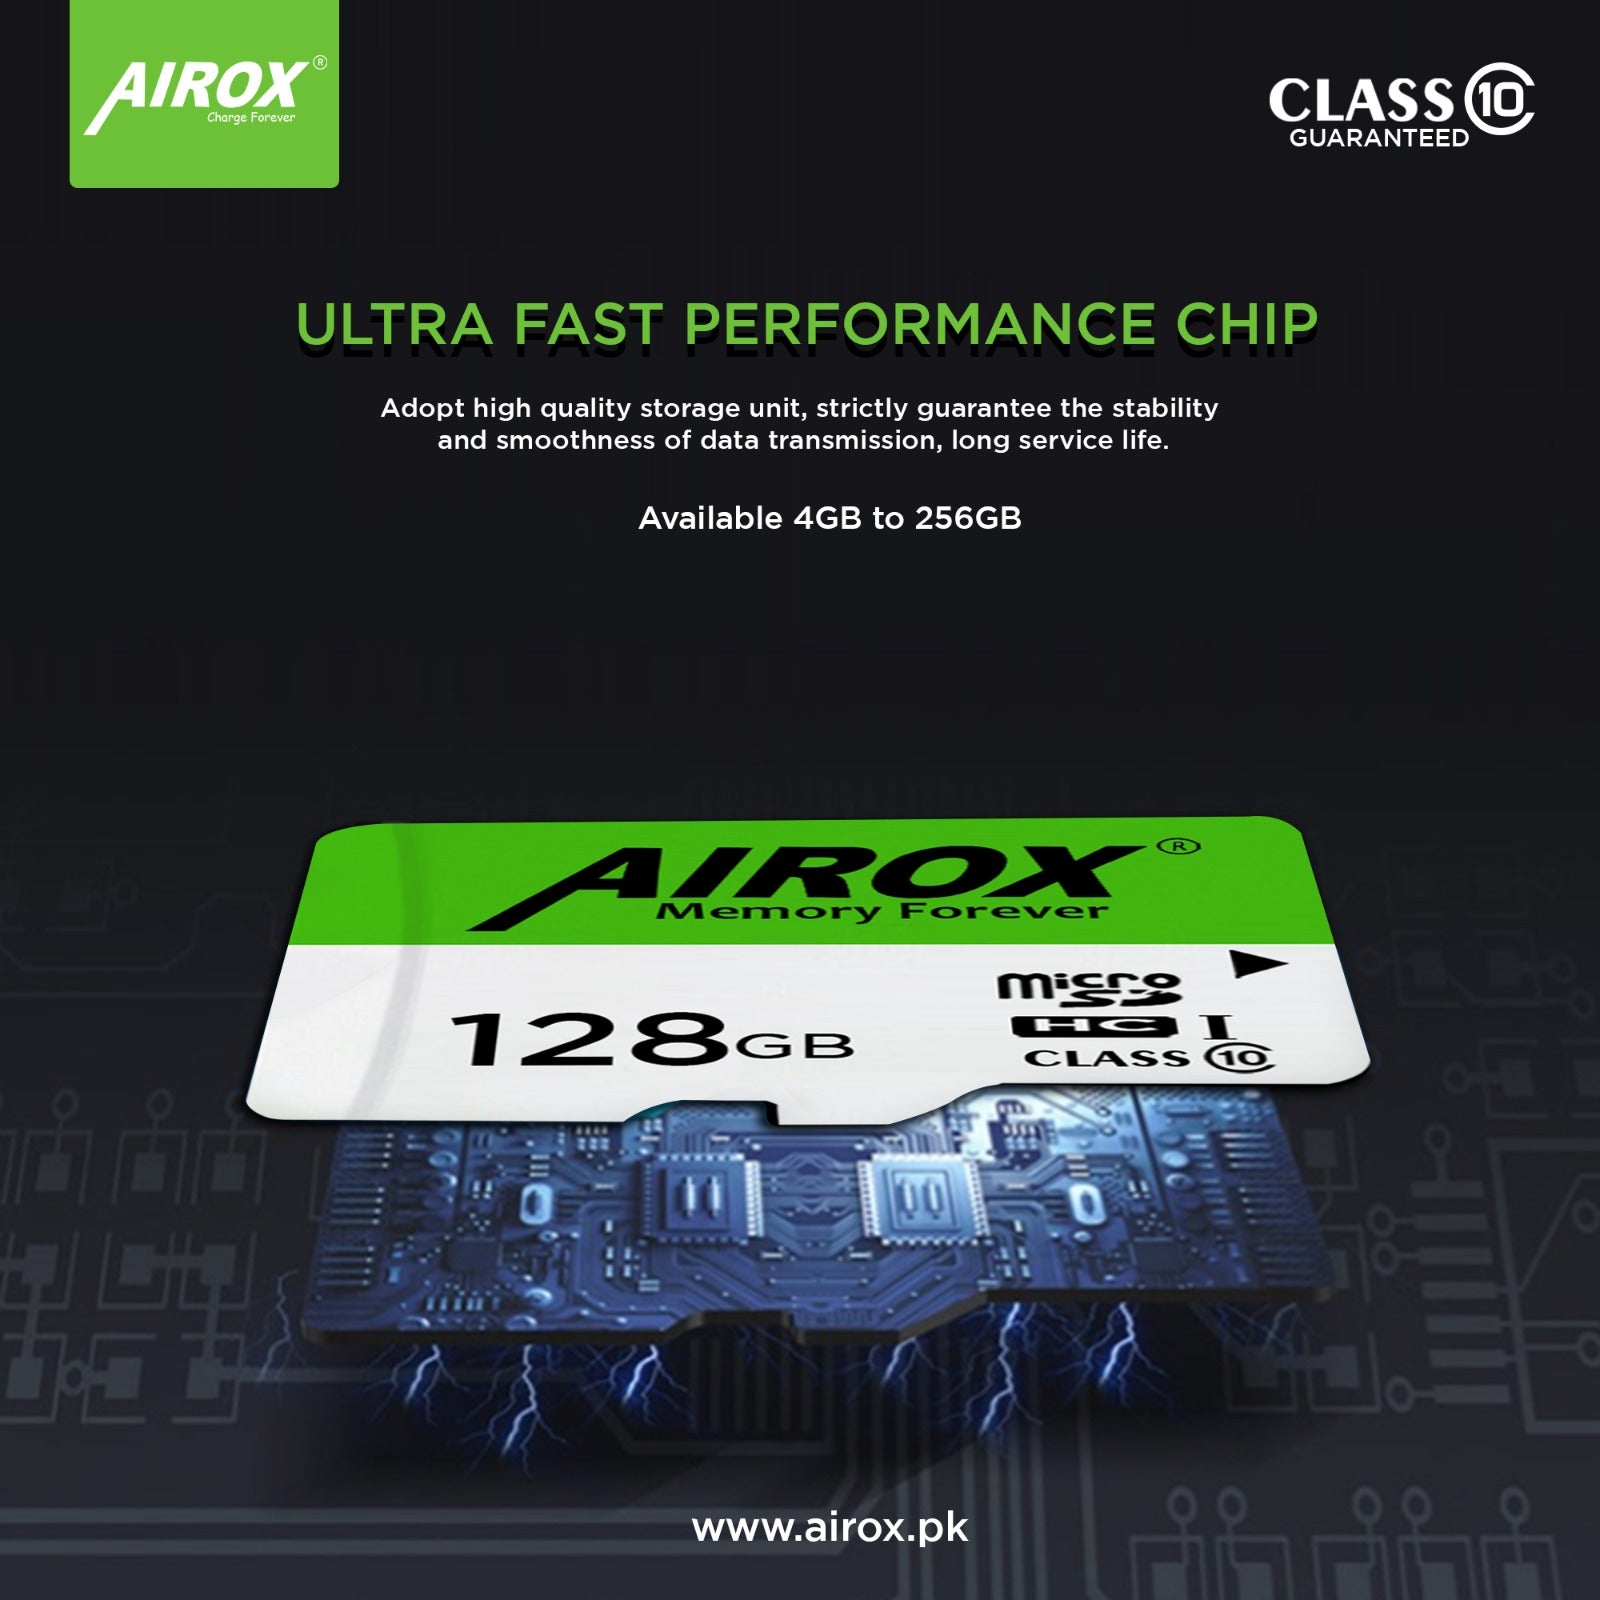 Airox memory cards